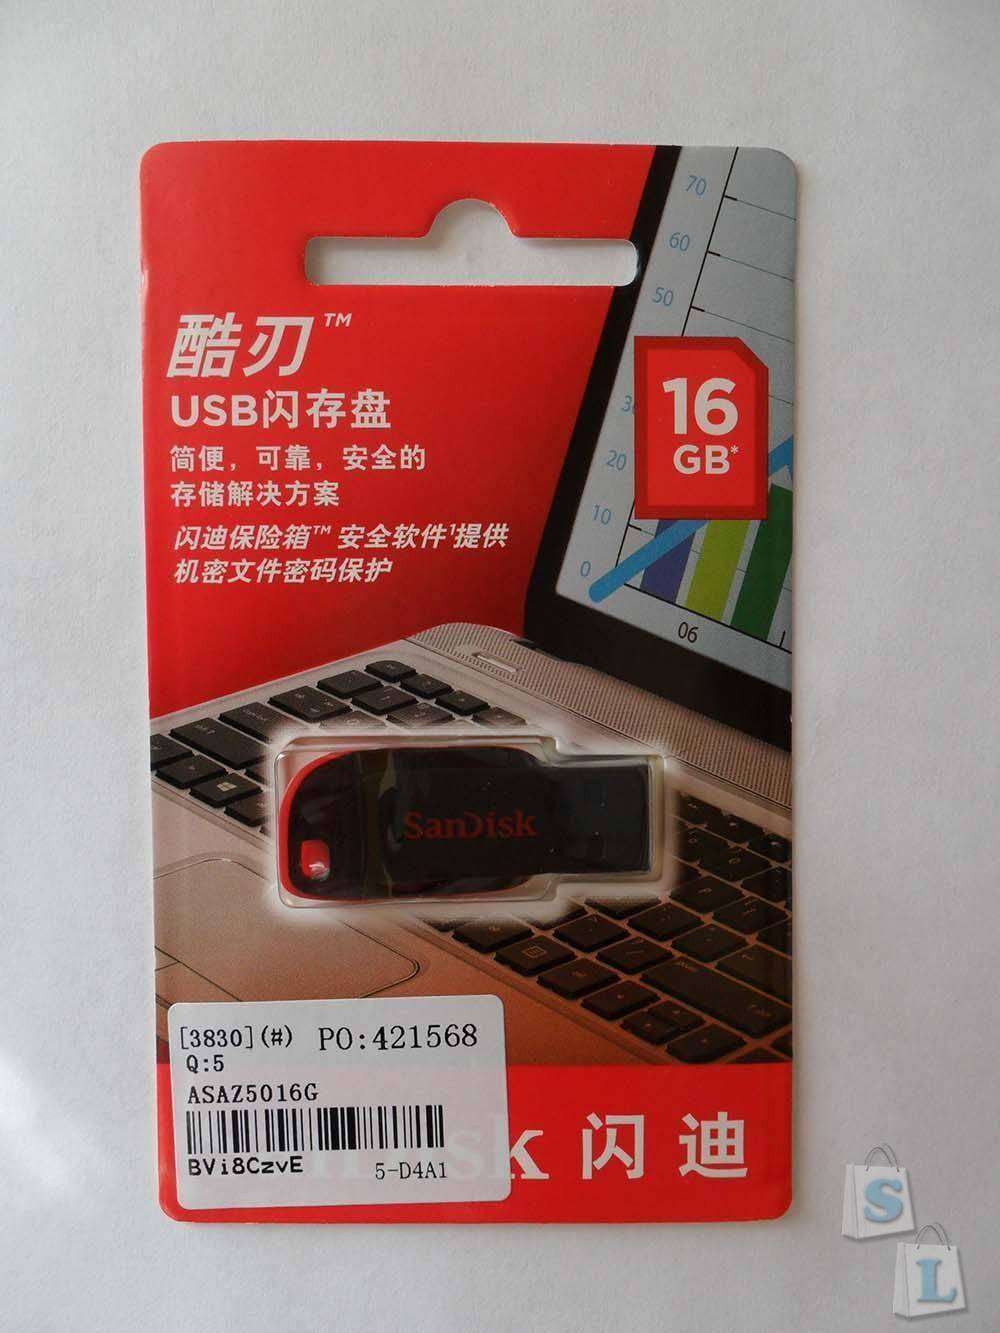 TinyDeal: SanDisk 16GB USB 2.0 по хорошей цене.